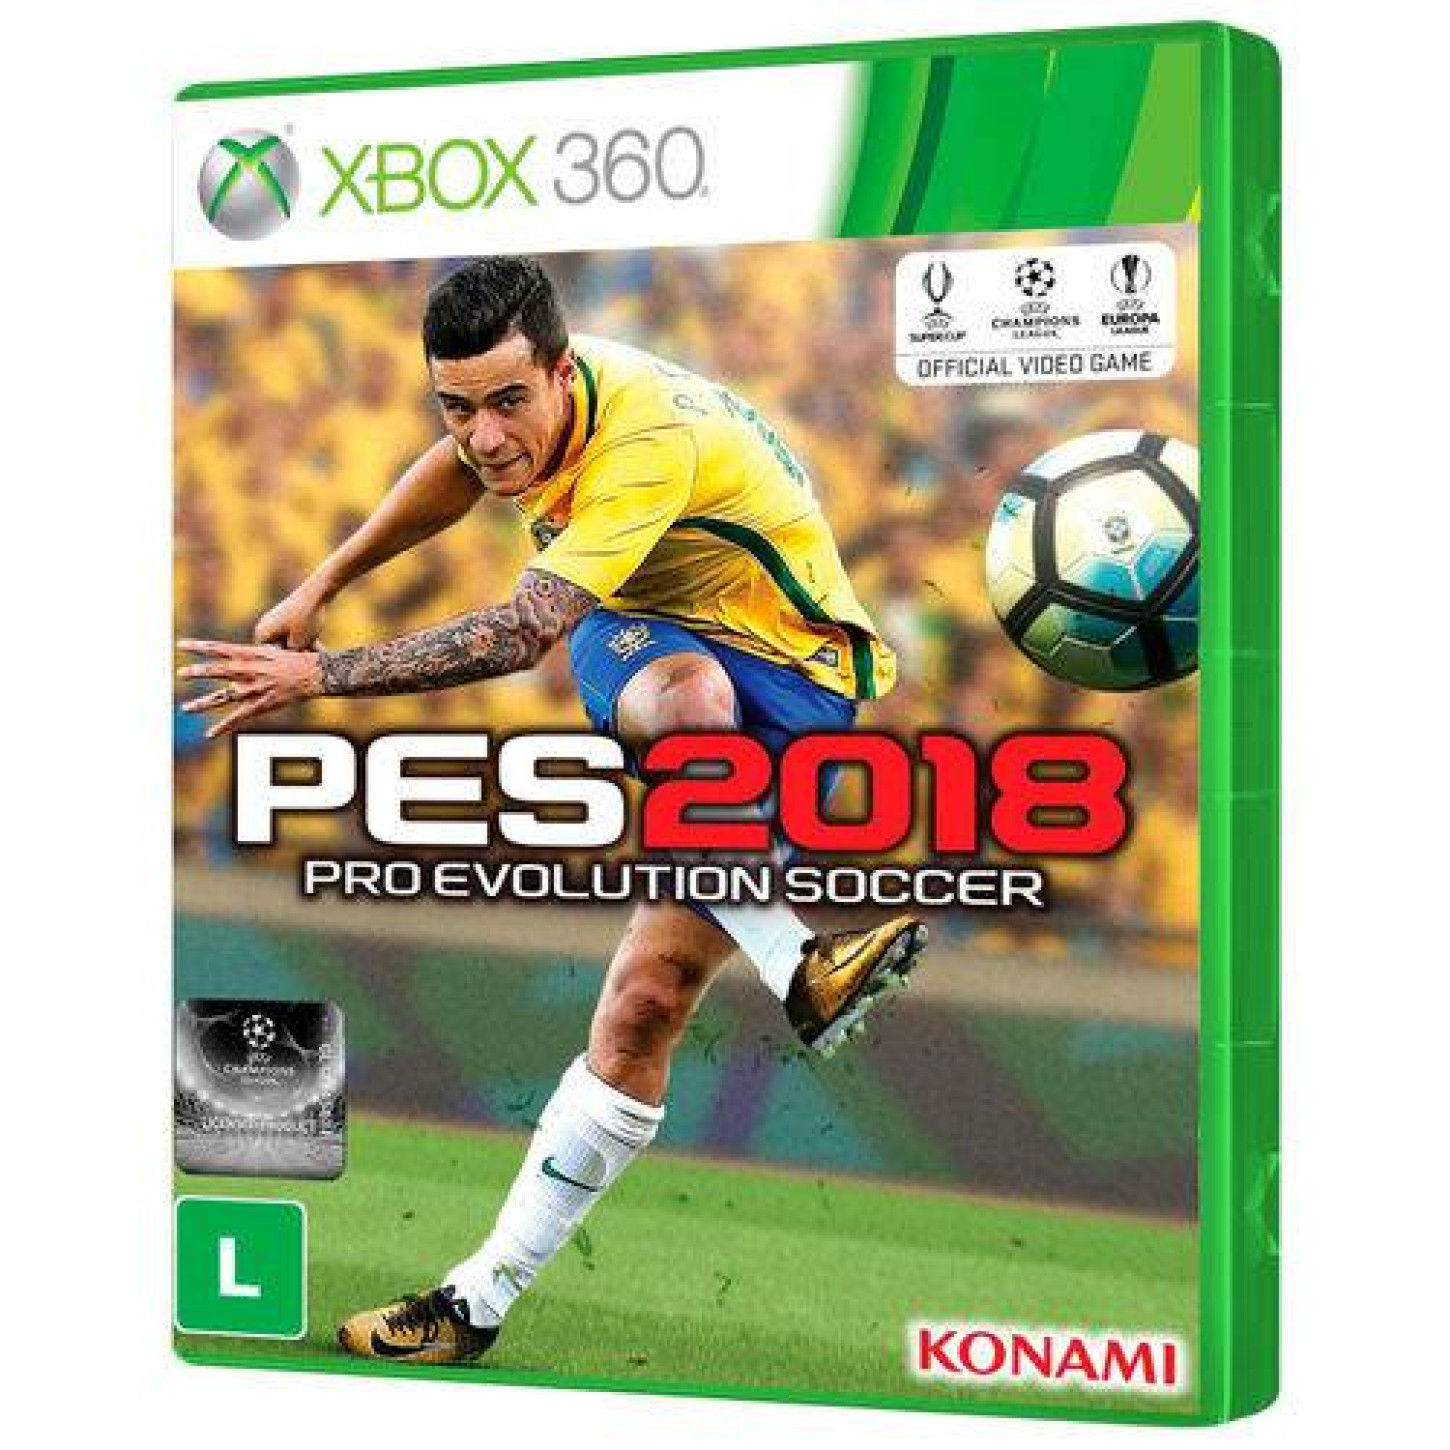 Pes 2018 Jogo Xbox 360 Dvd LT 3.0 - Desbloqueado - Videogames - Lagoa Nova,  Natal 1249080015